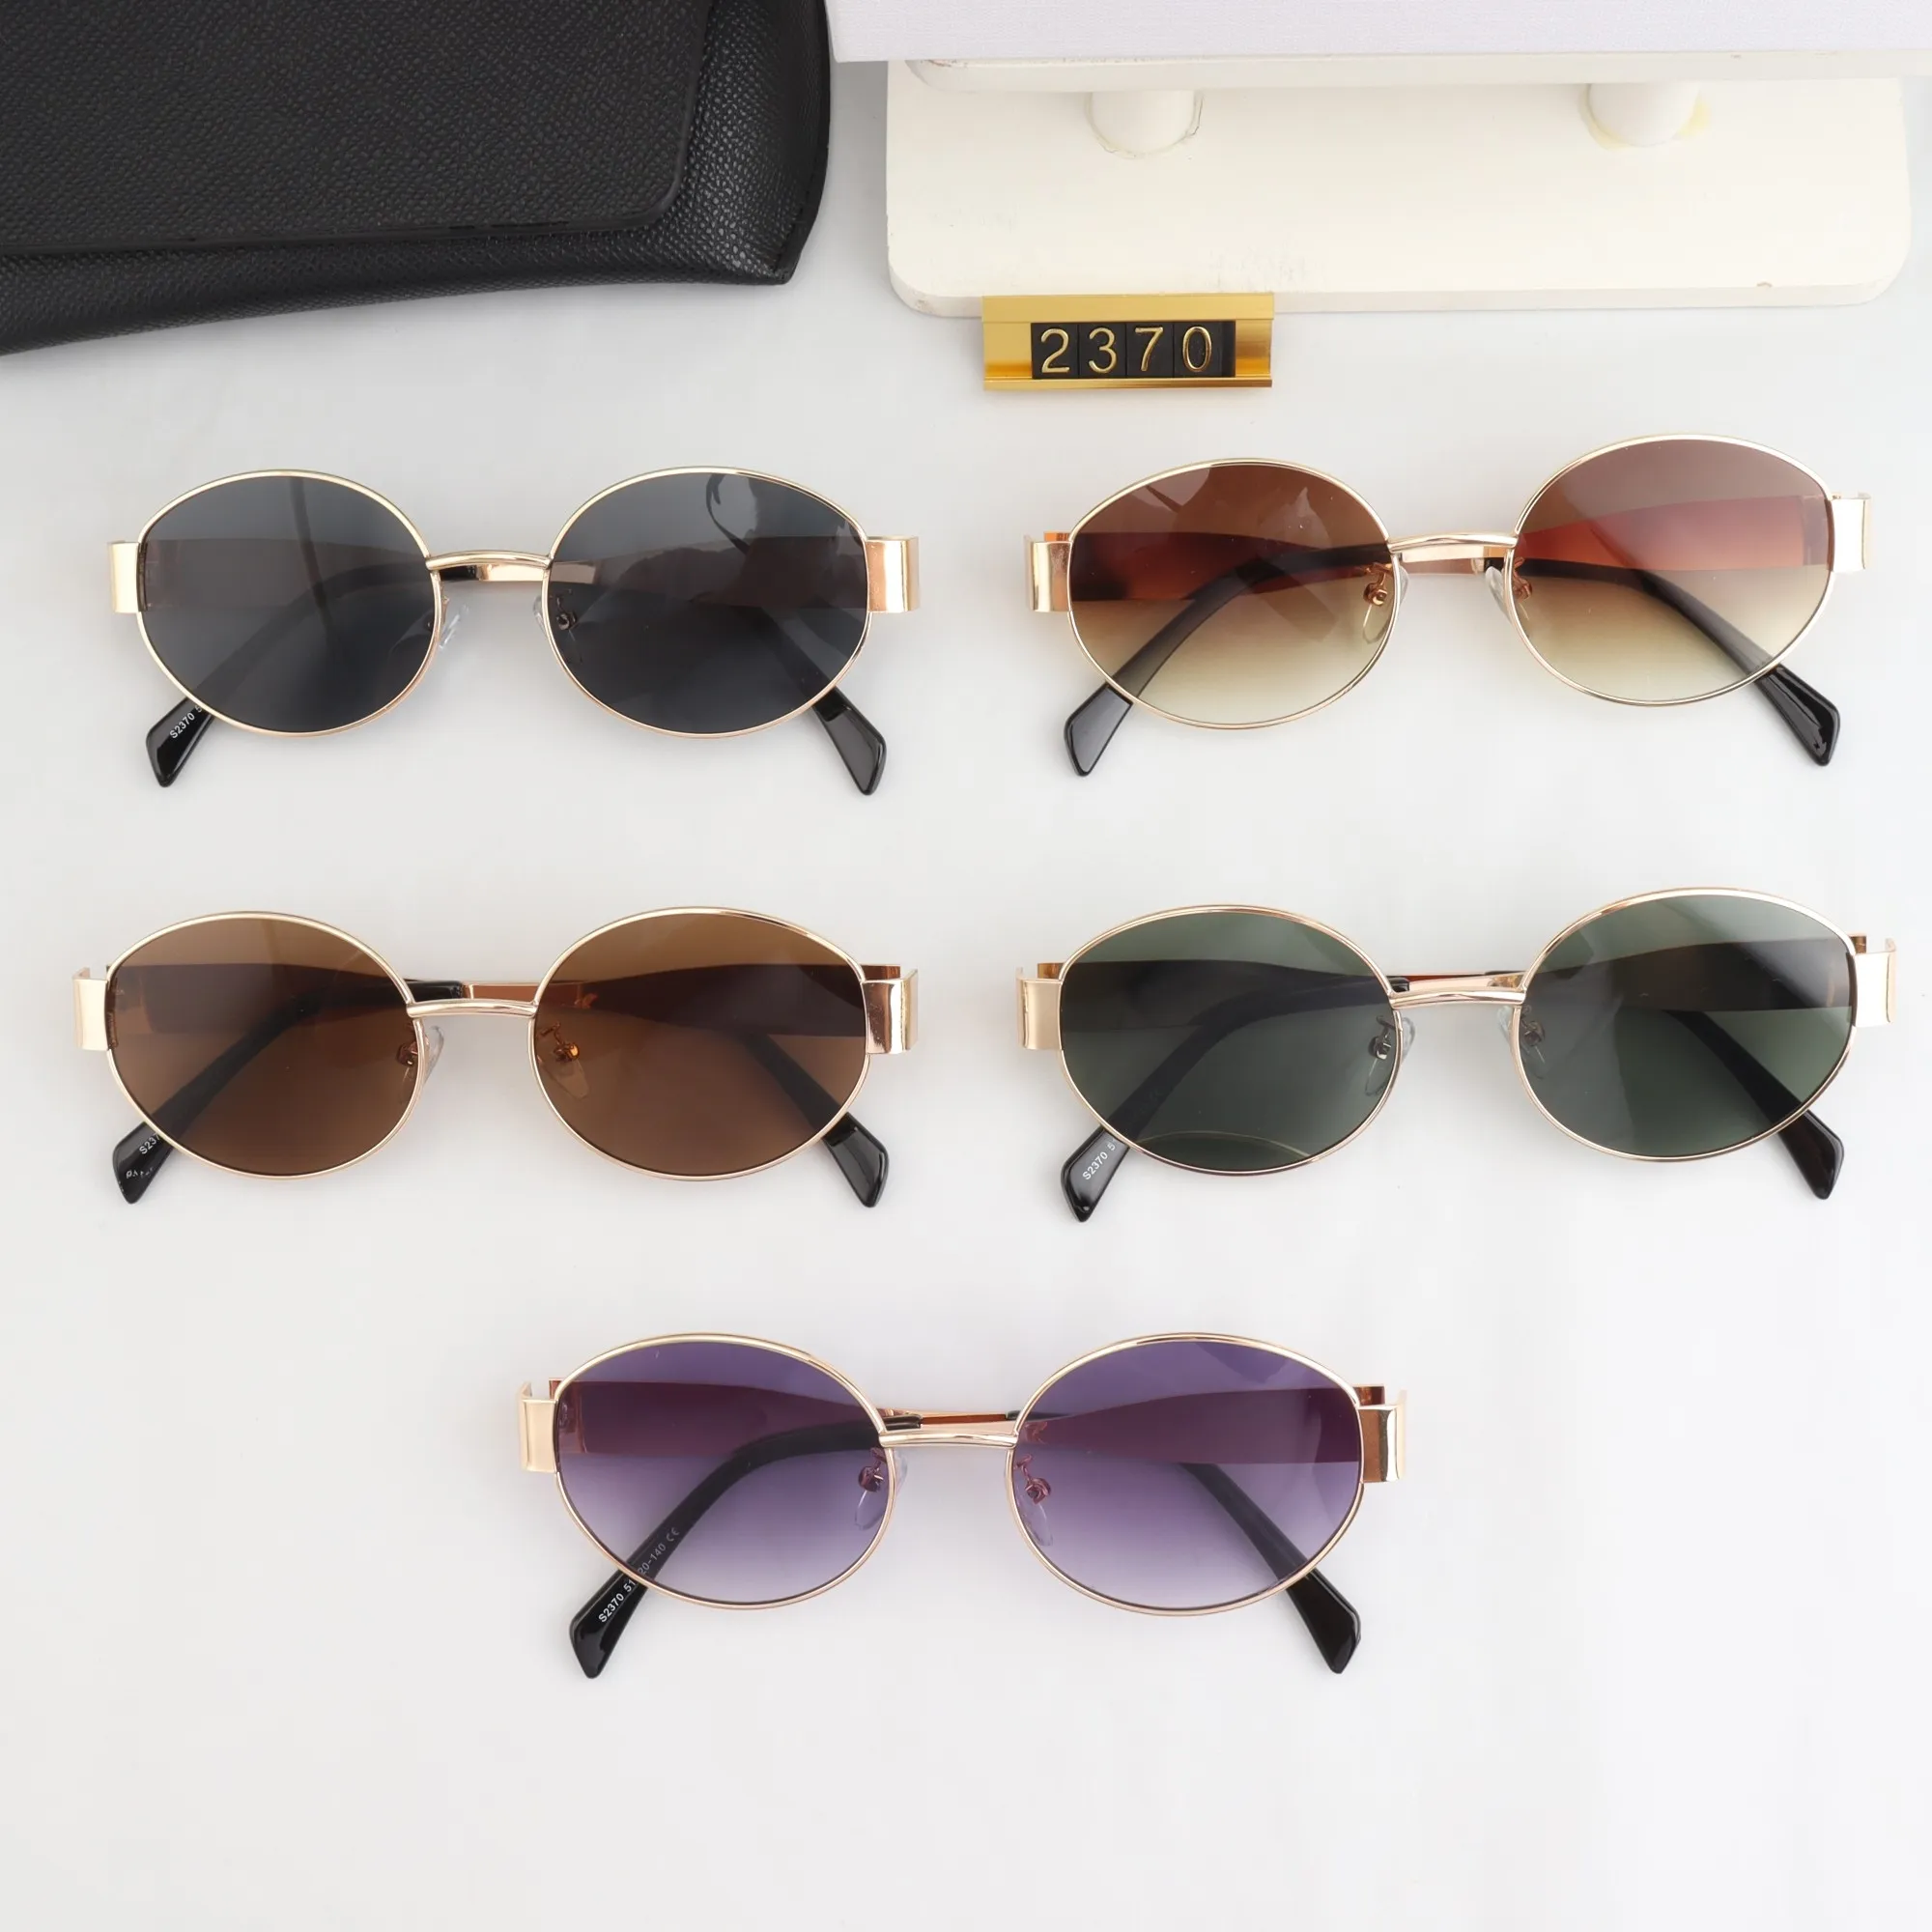 Fashion Designer Sunglasses for Men Women Luxury Metal Frame Sun Glasses Classic Adumbral Eyewear Accessories Travel Fishing Sun Glasses Cycling Sunglasses